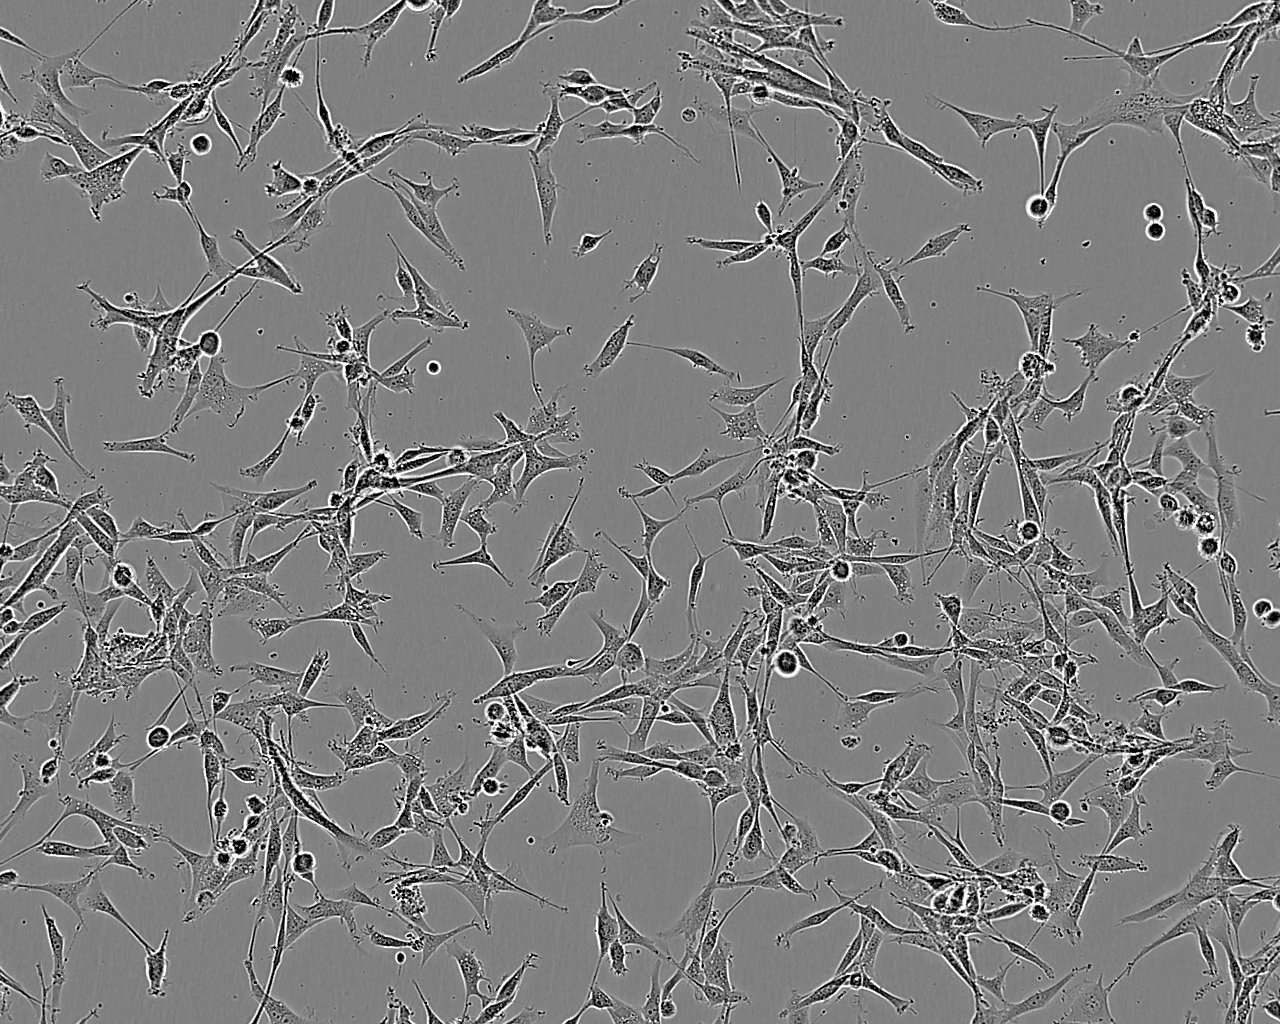 Becker epithelioid cells人脑星形胶质细胞系